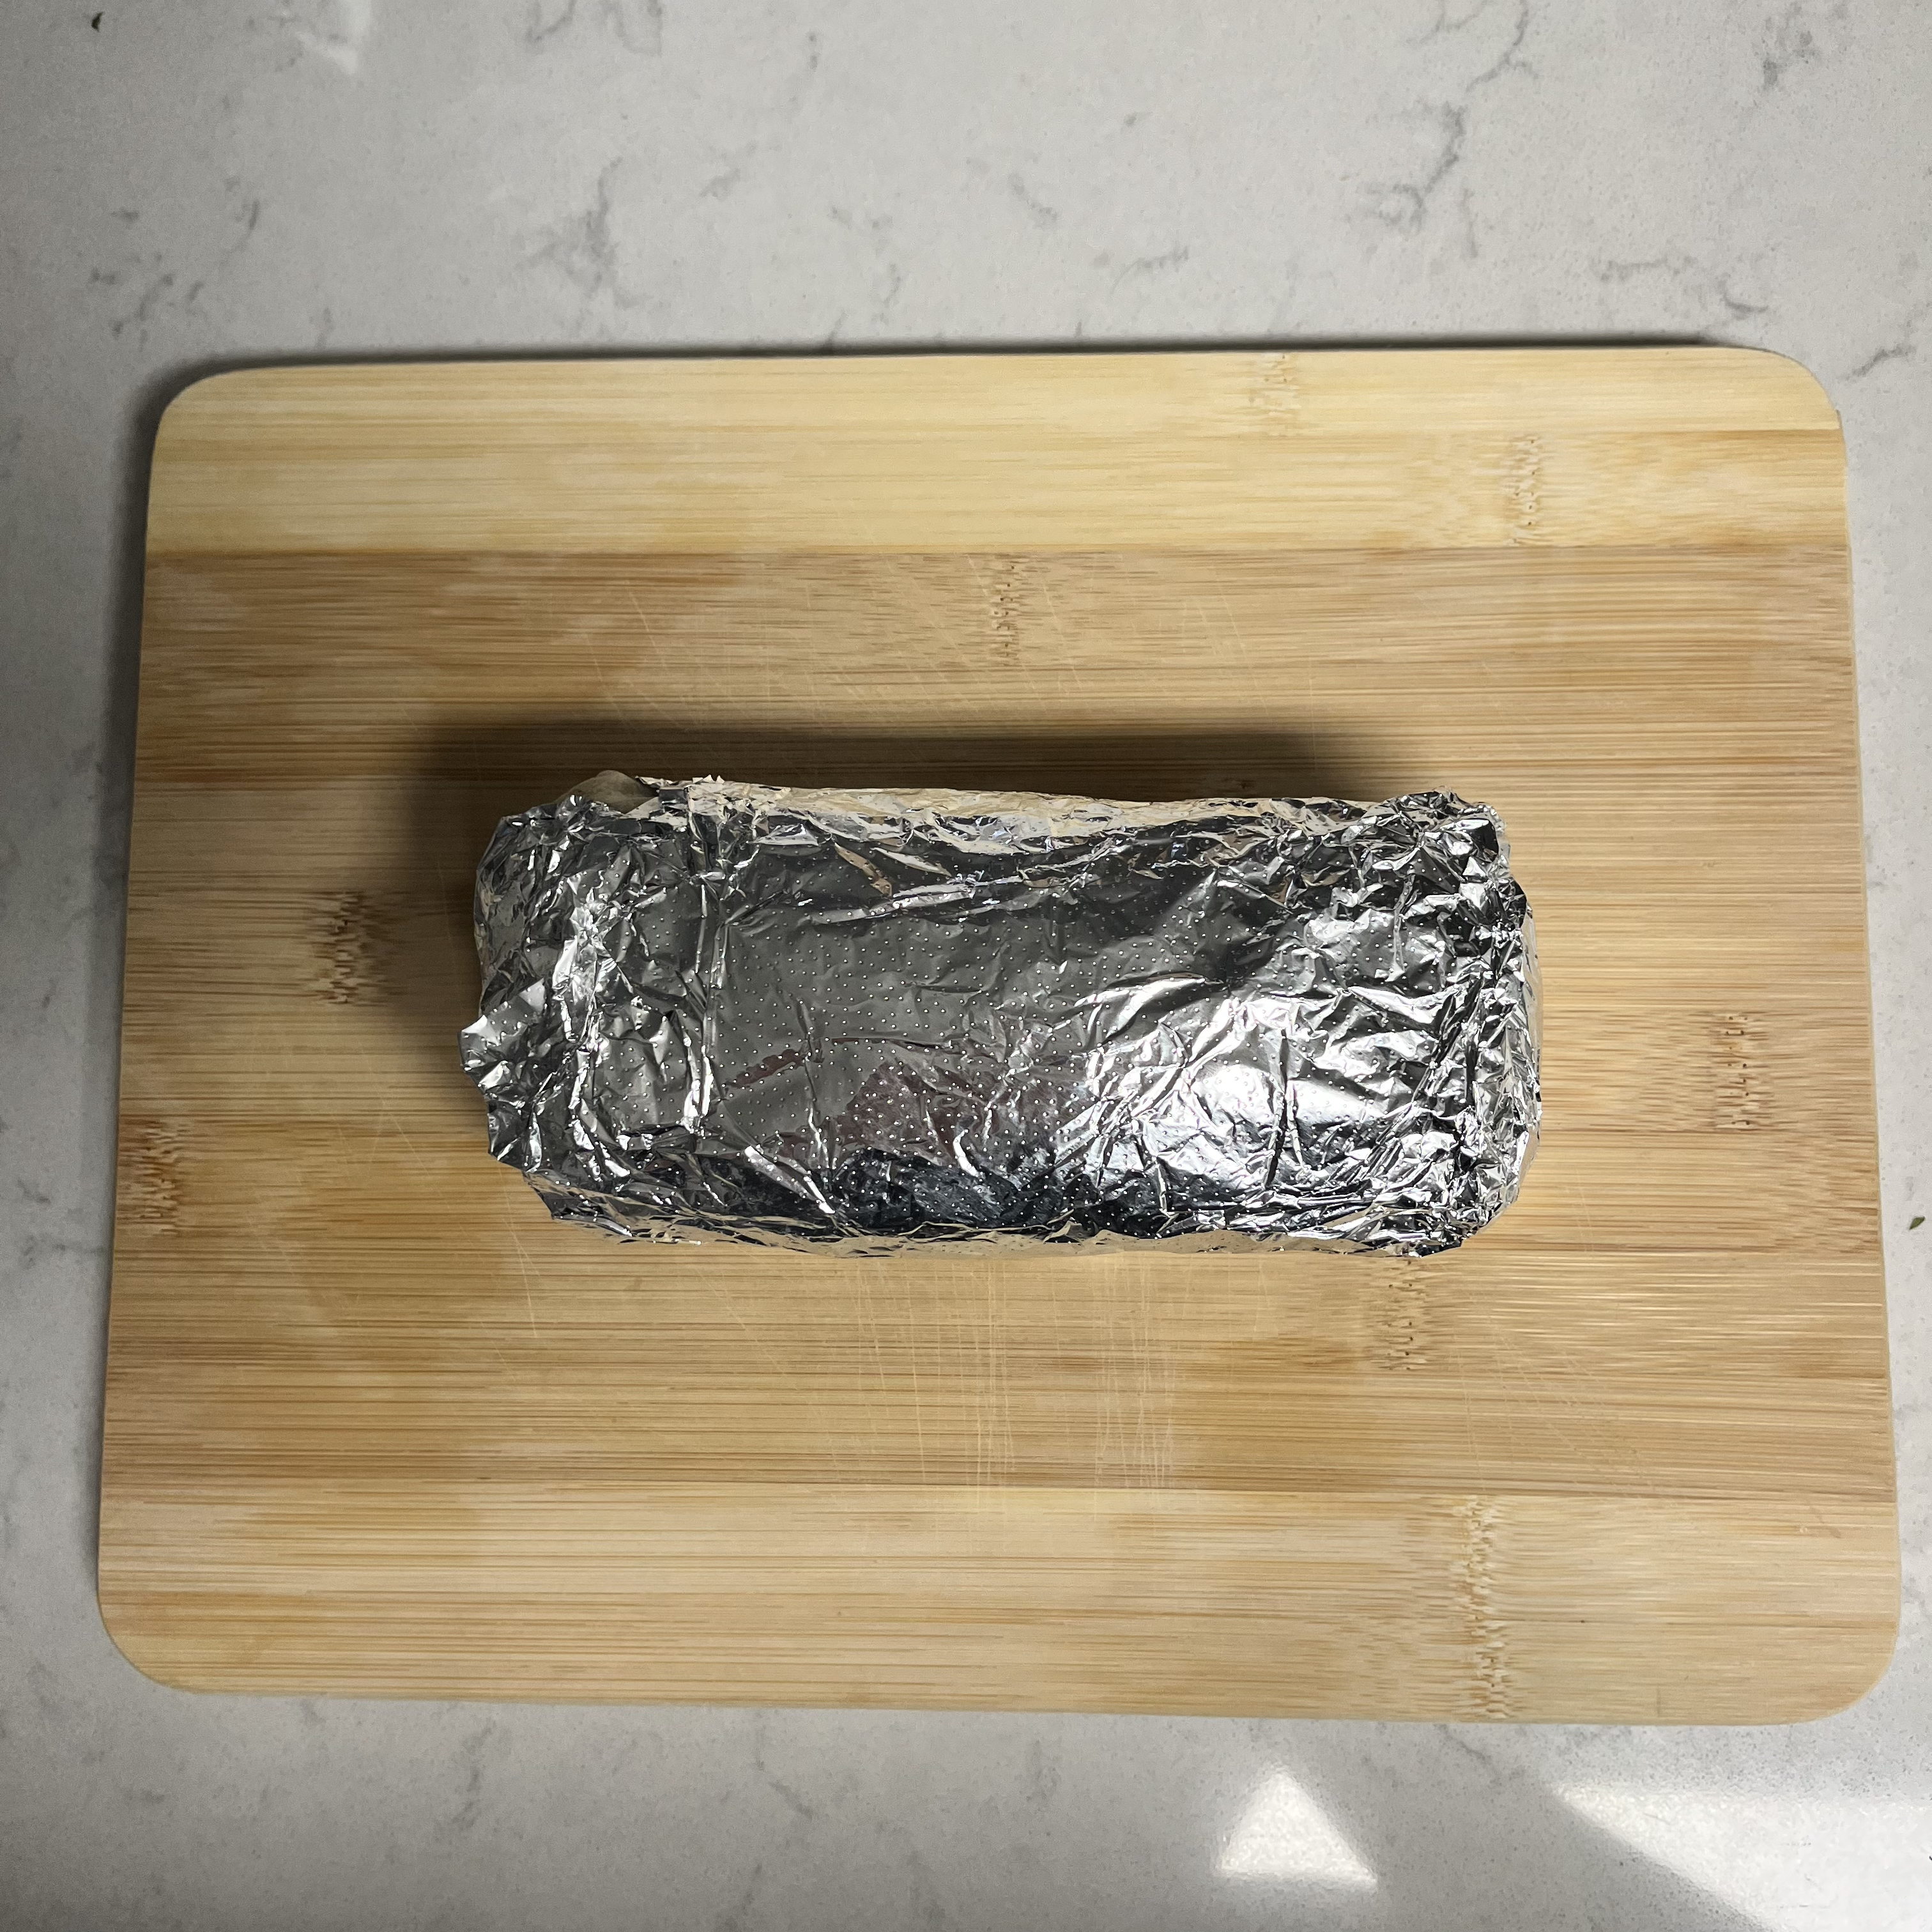 Best Chipotle Burrito